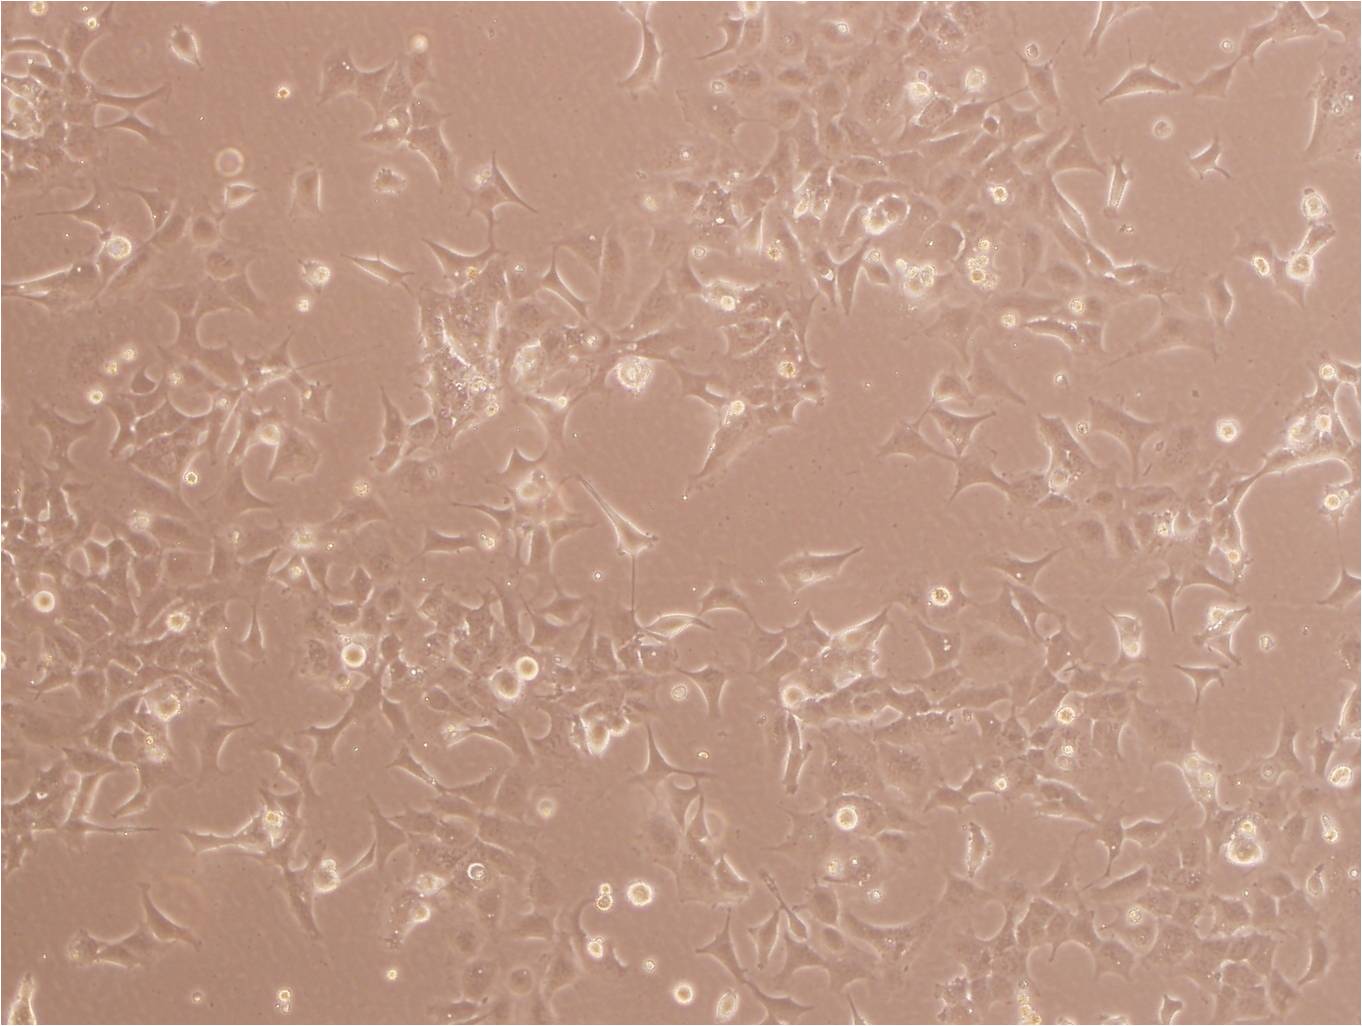 NCI-H146 Cell:人小细胞肺癌细胞系,NCI-H146 Cell